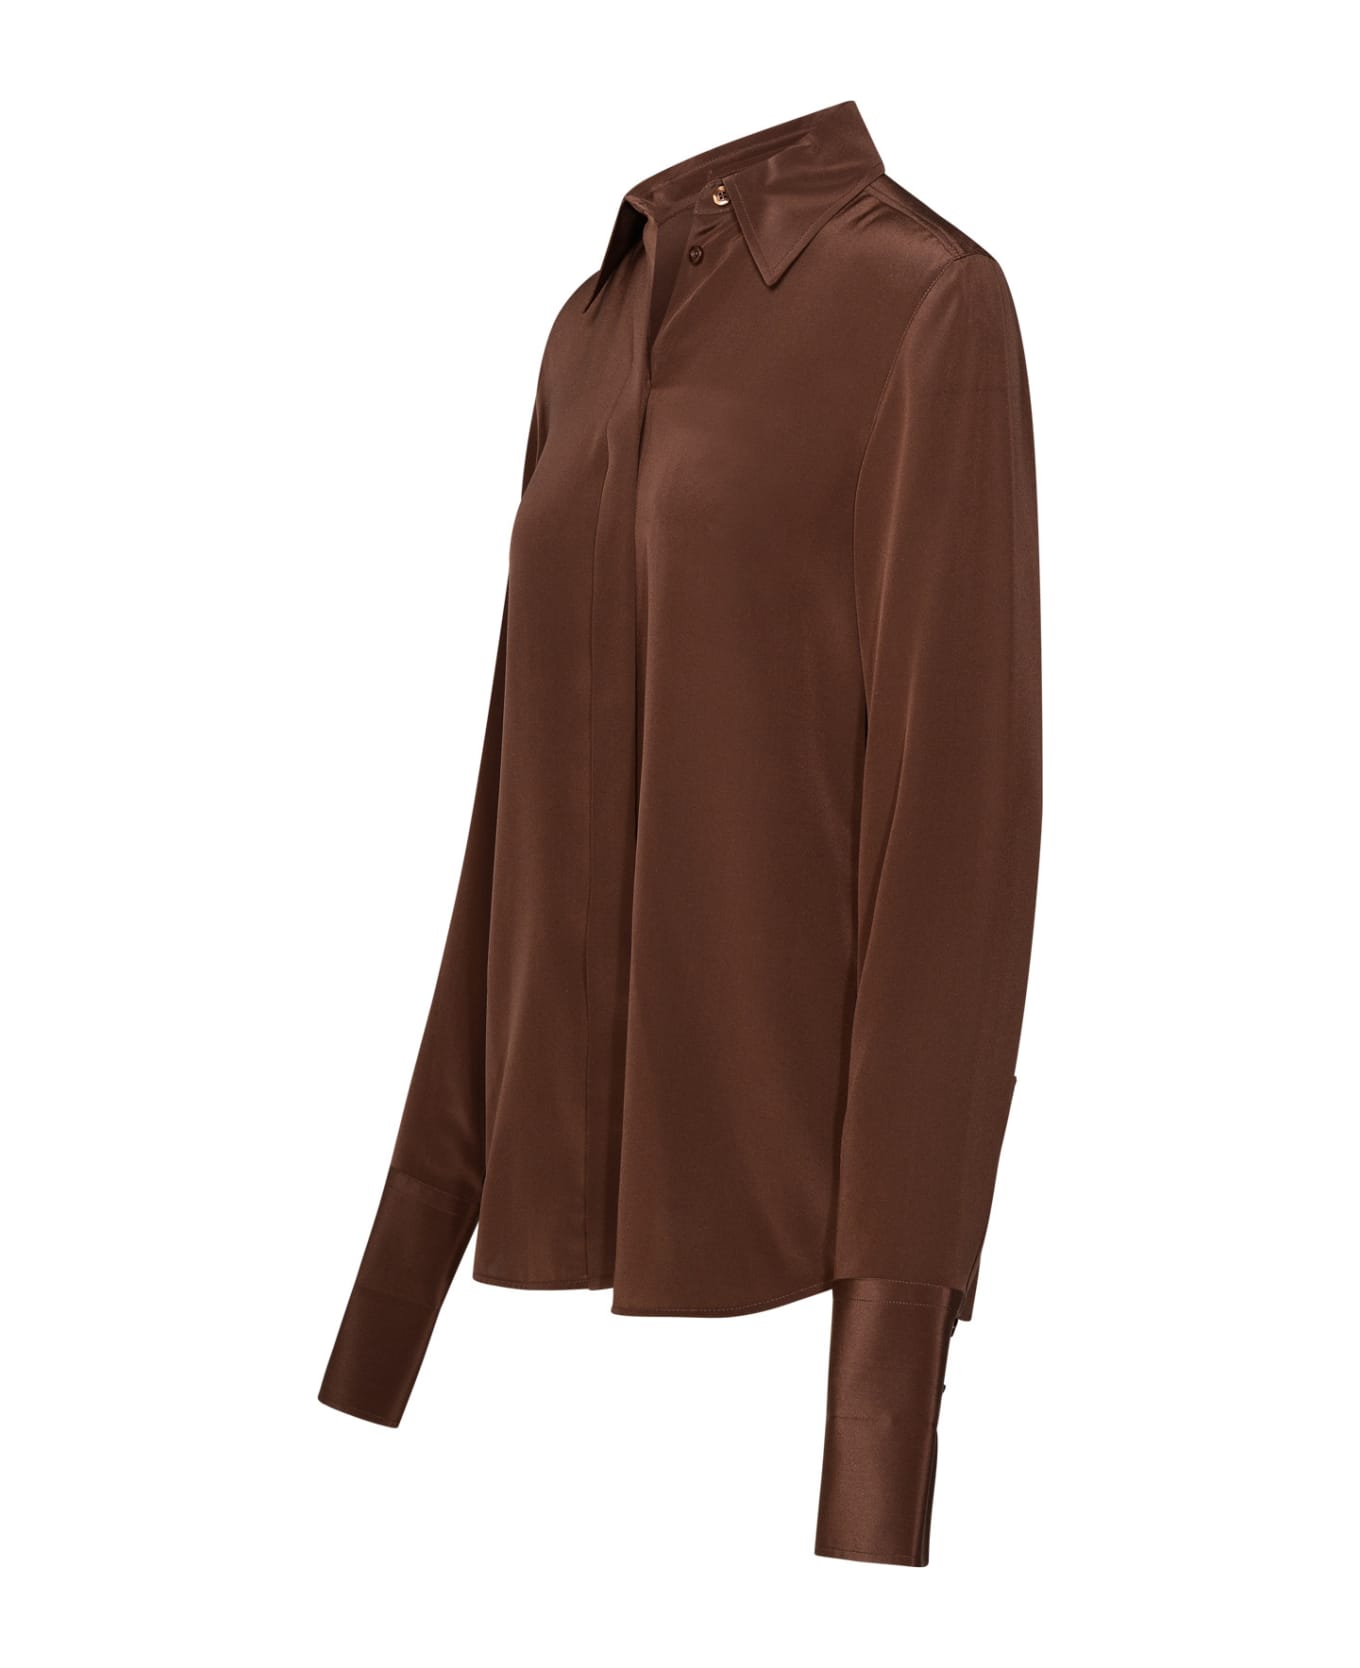 SportMax Brown Silk Shirt - Brown